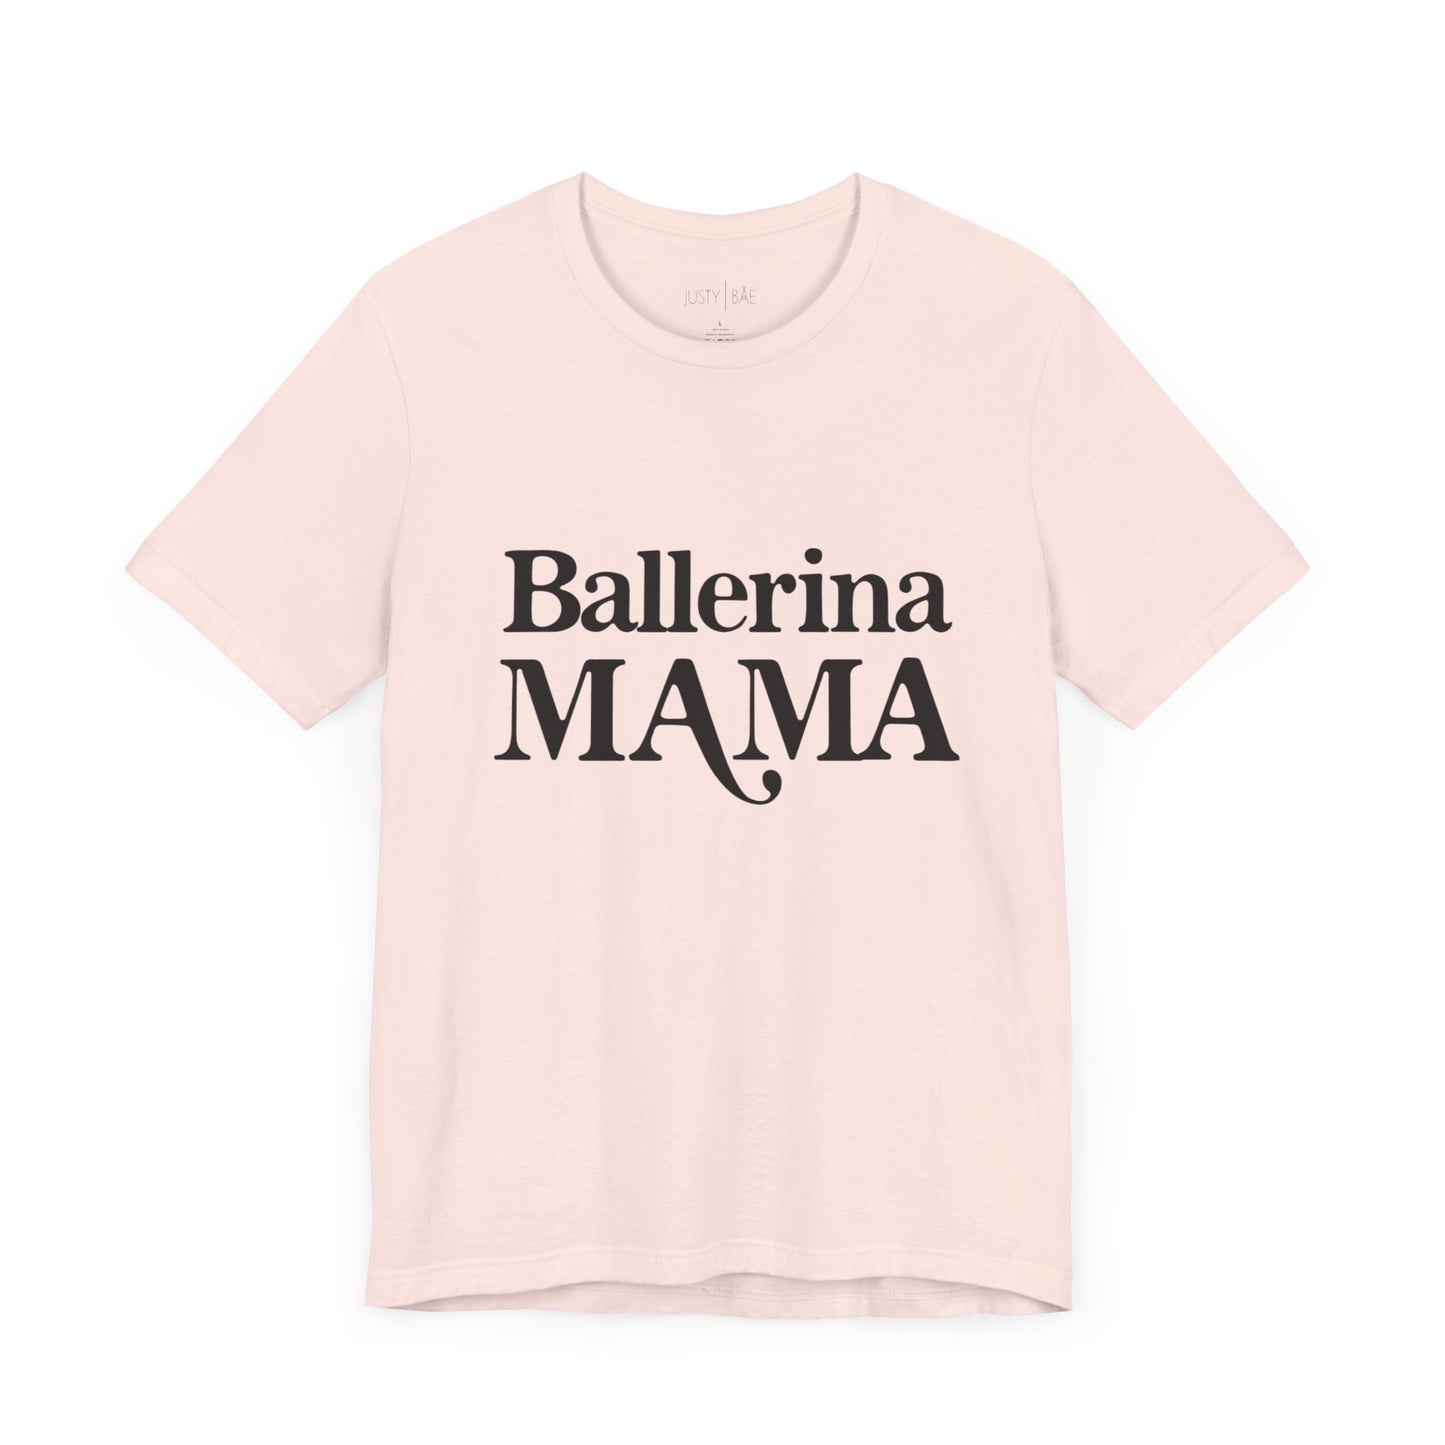 Ballerina Mama Tee